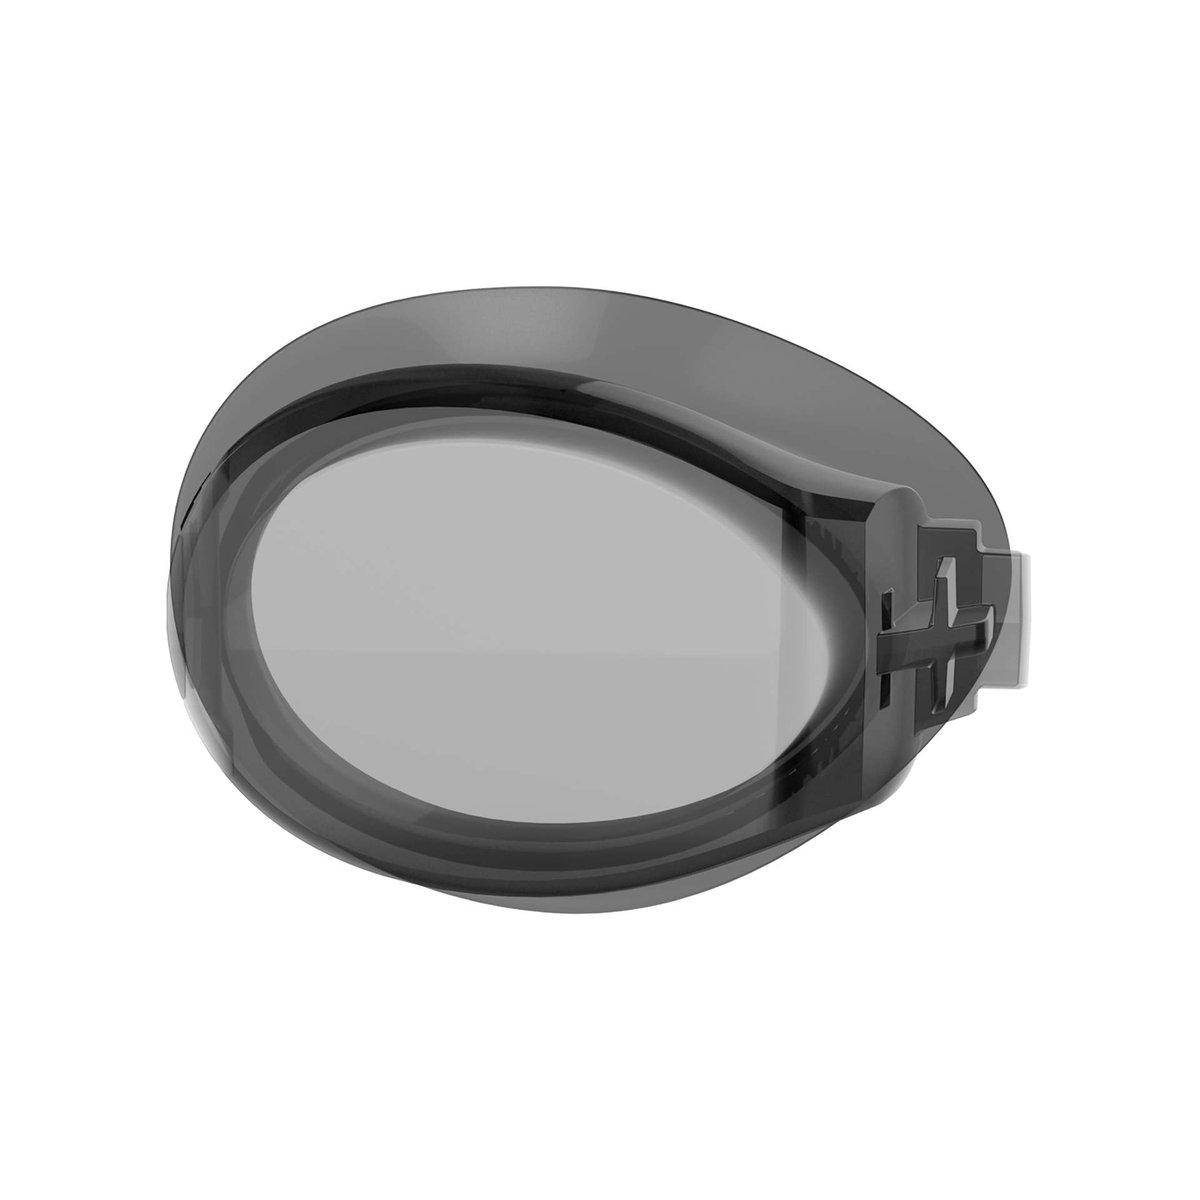 Speedo mariner pro optical lens smoke -7.0